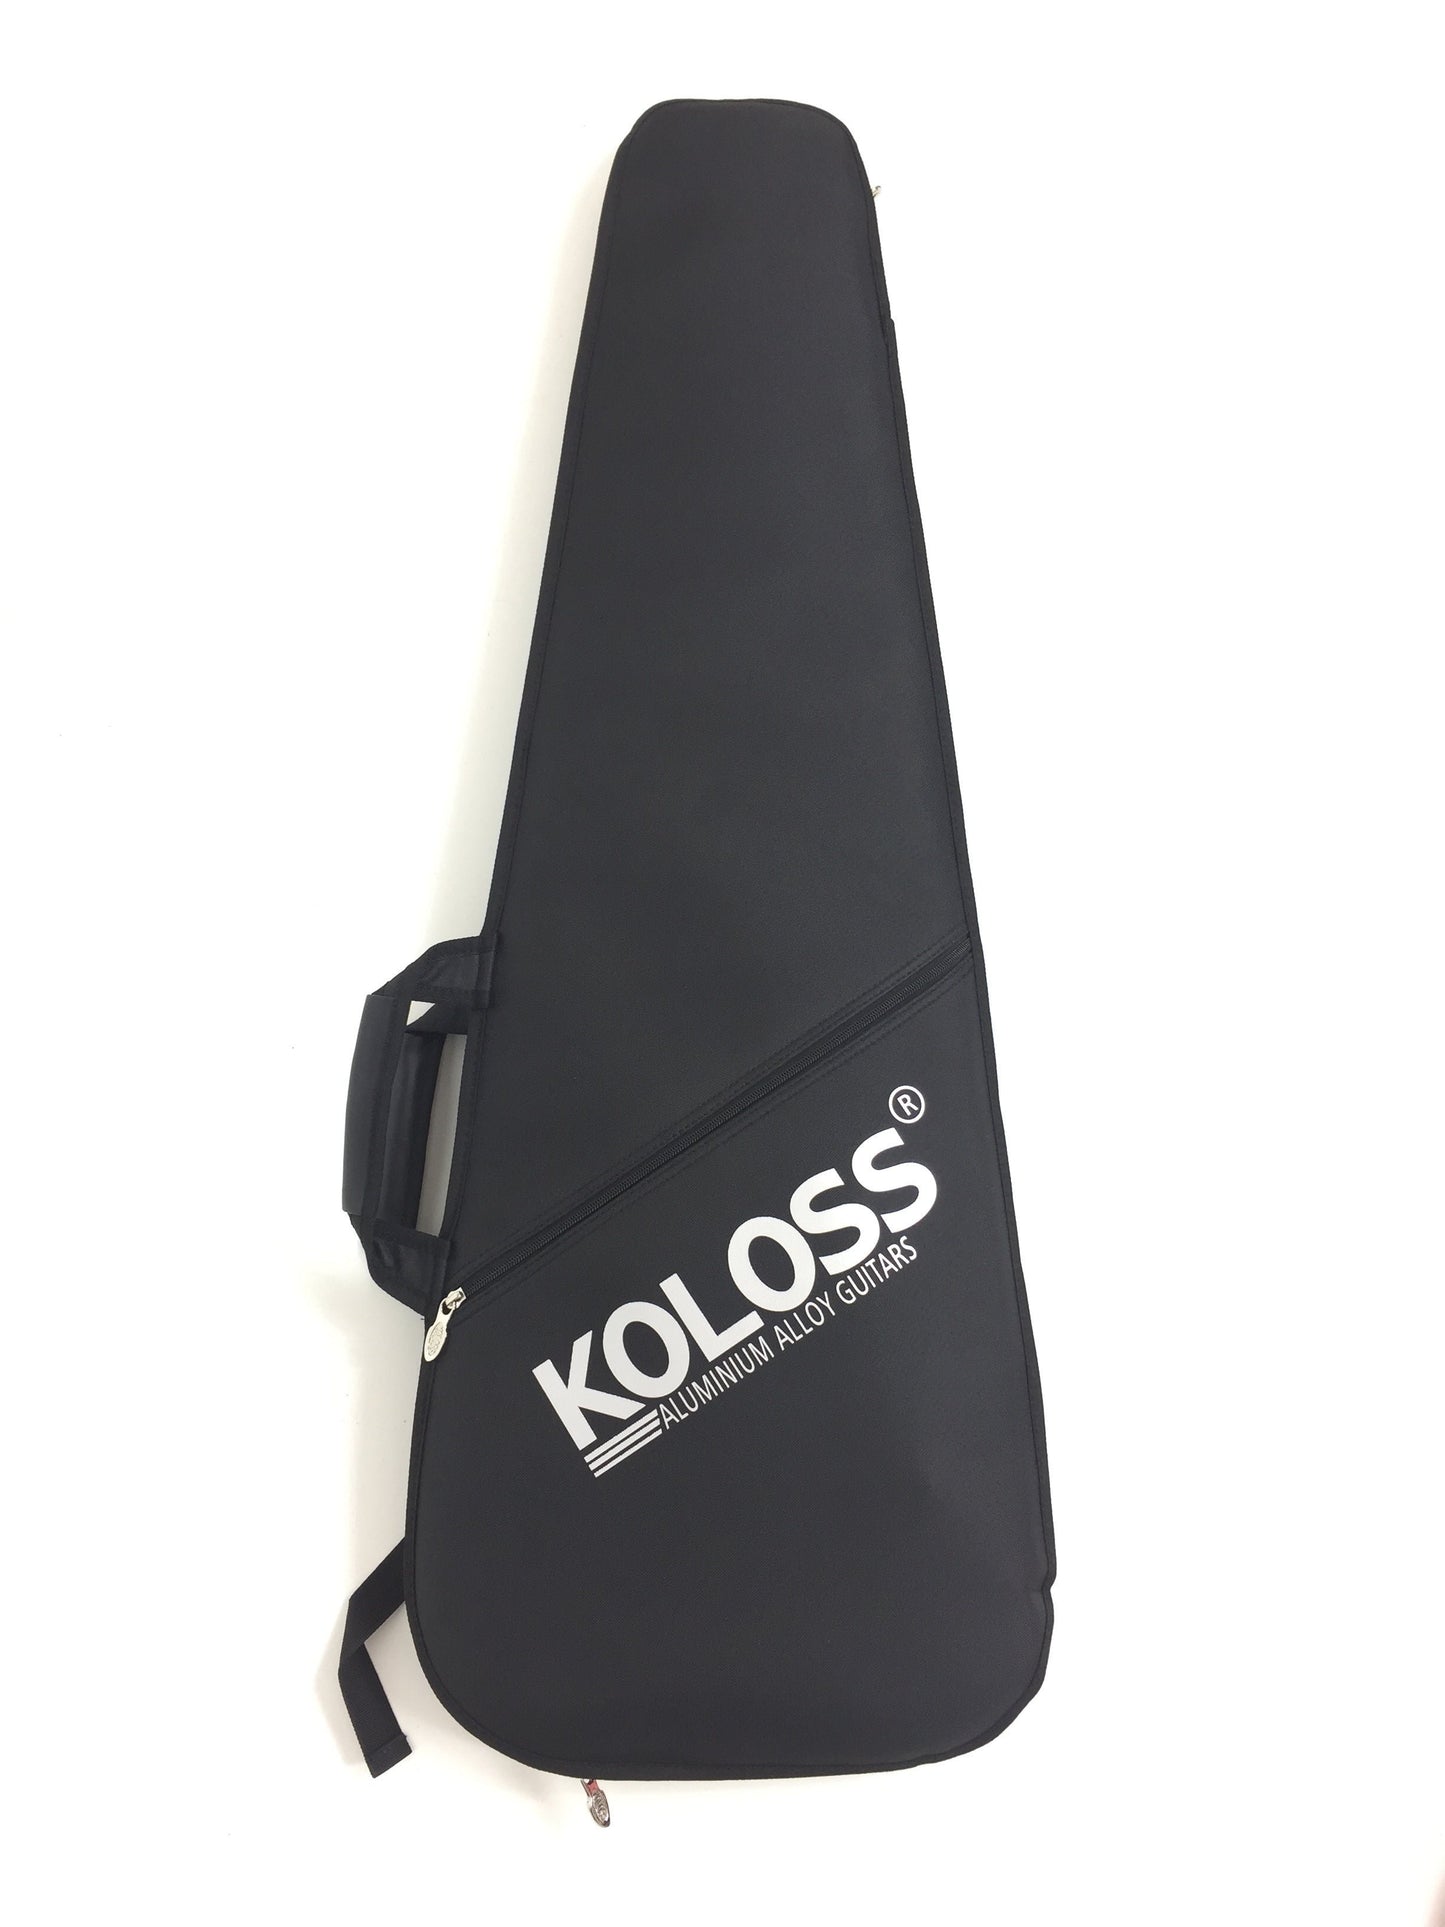 KOLOSS GT5 Aluminum Body Locking Machine Head Electric Guitar + Bag